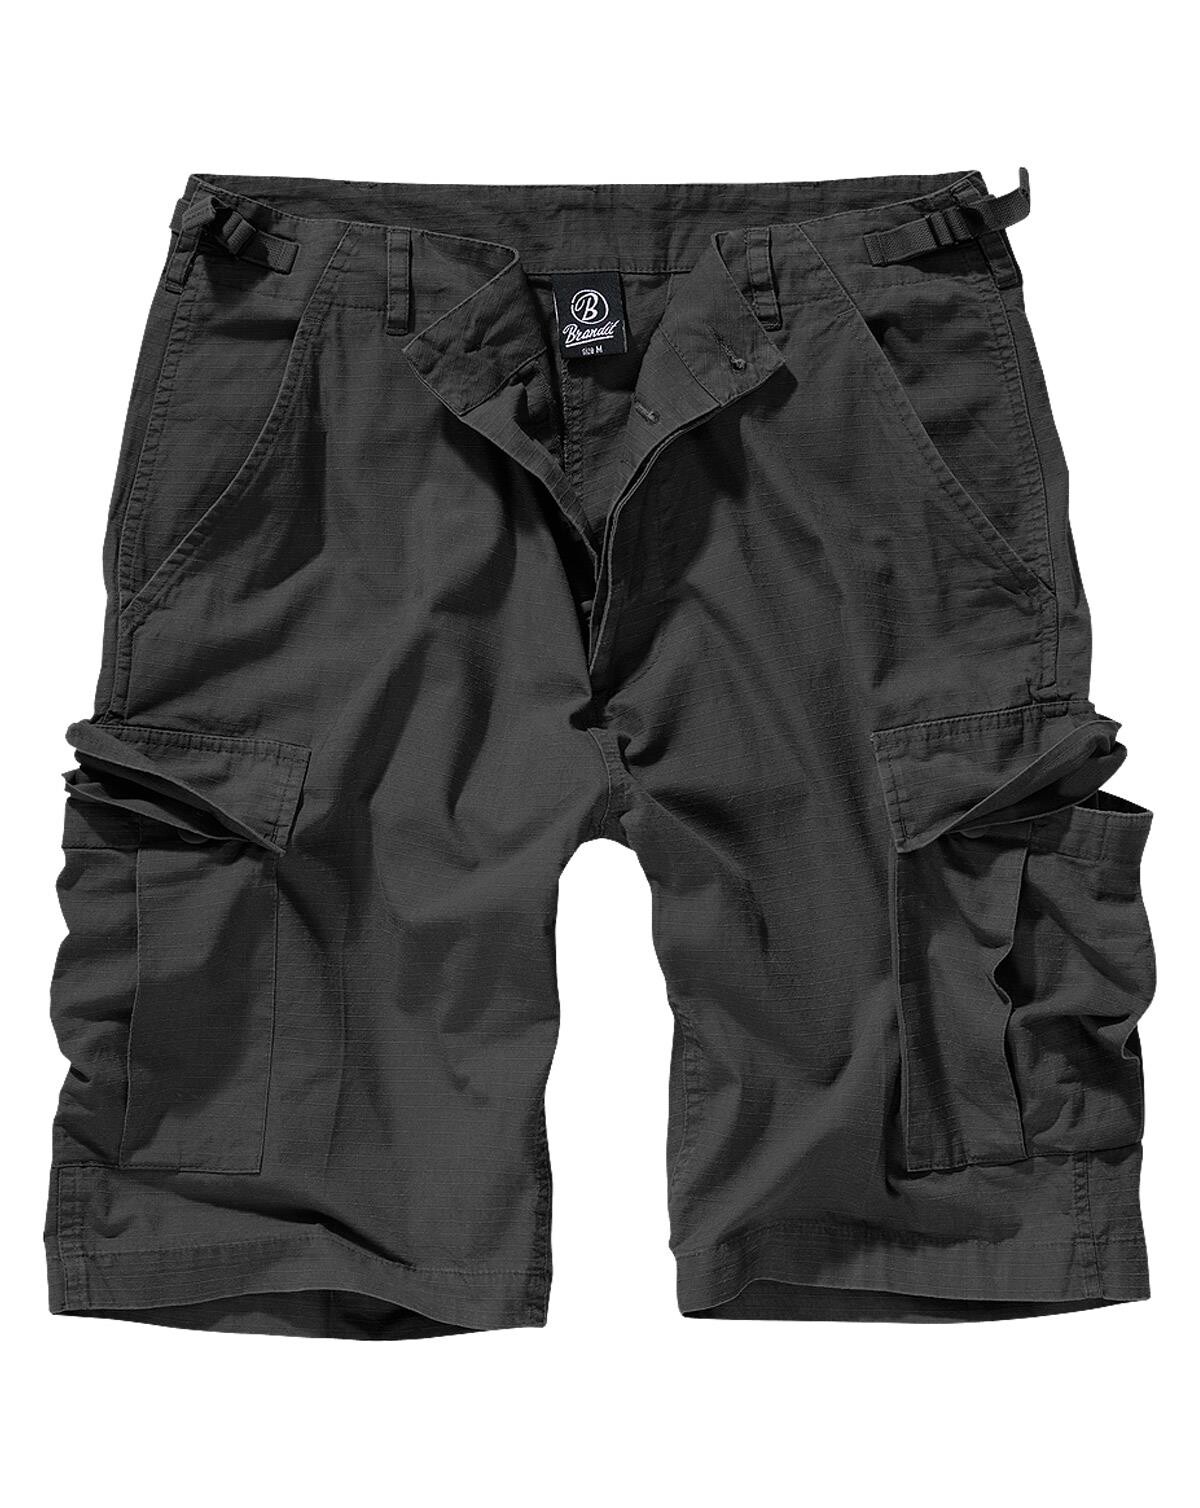 8: Brandit BDU Ripstop Shorts (Sort, M)